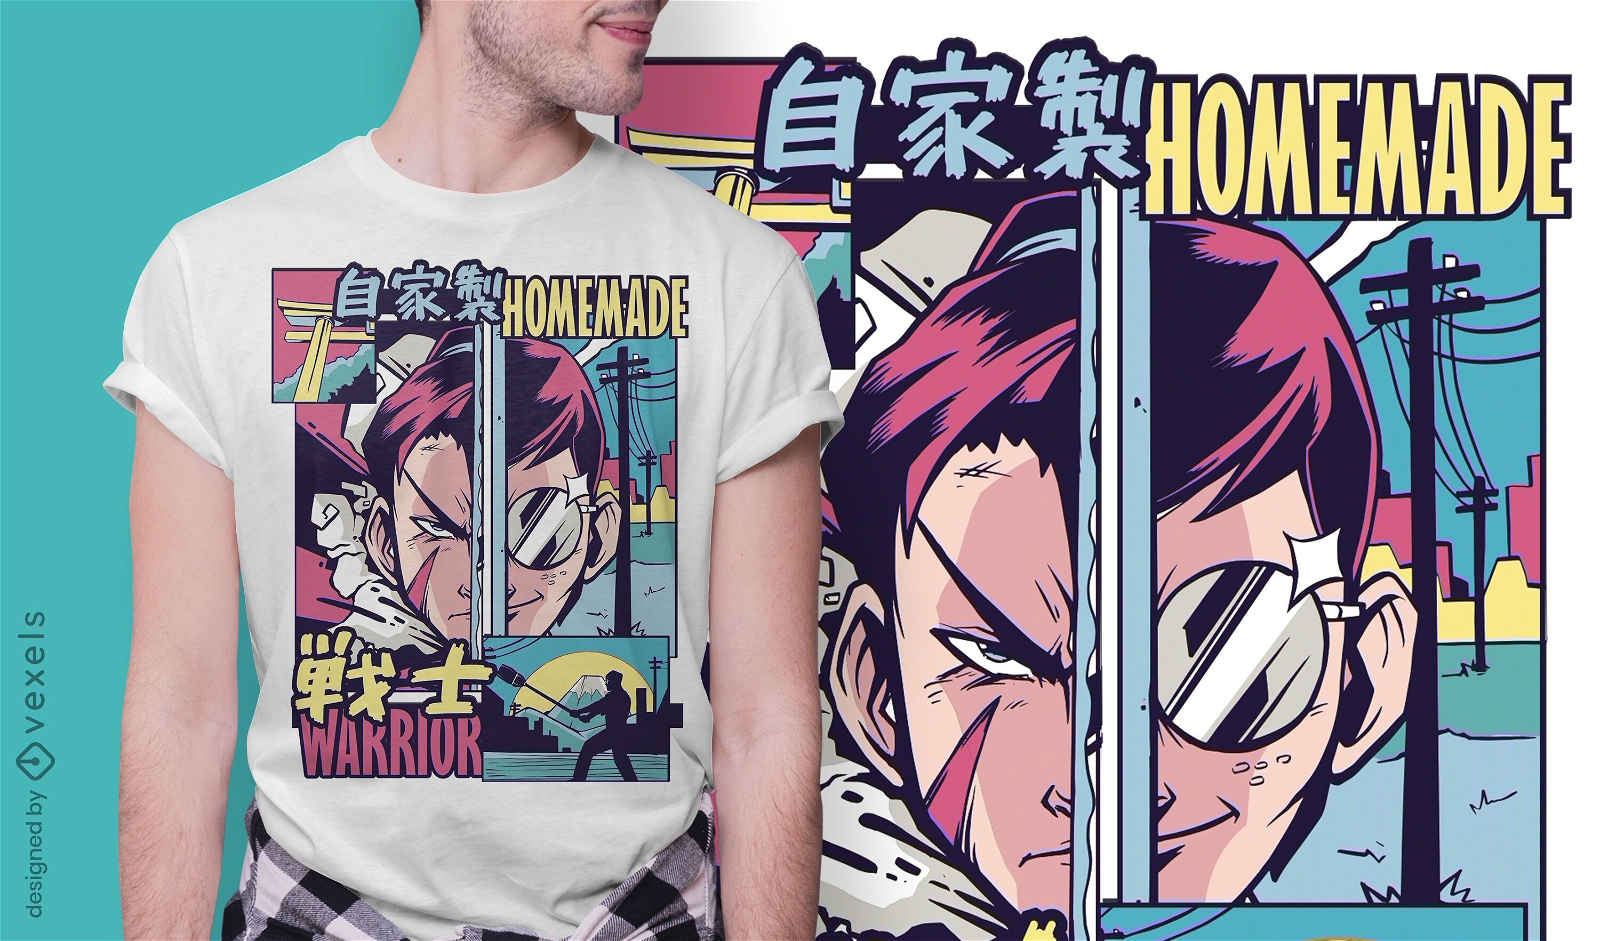 Dise?o de camiseta Warrior anime vaporwave.